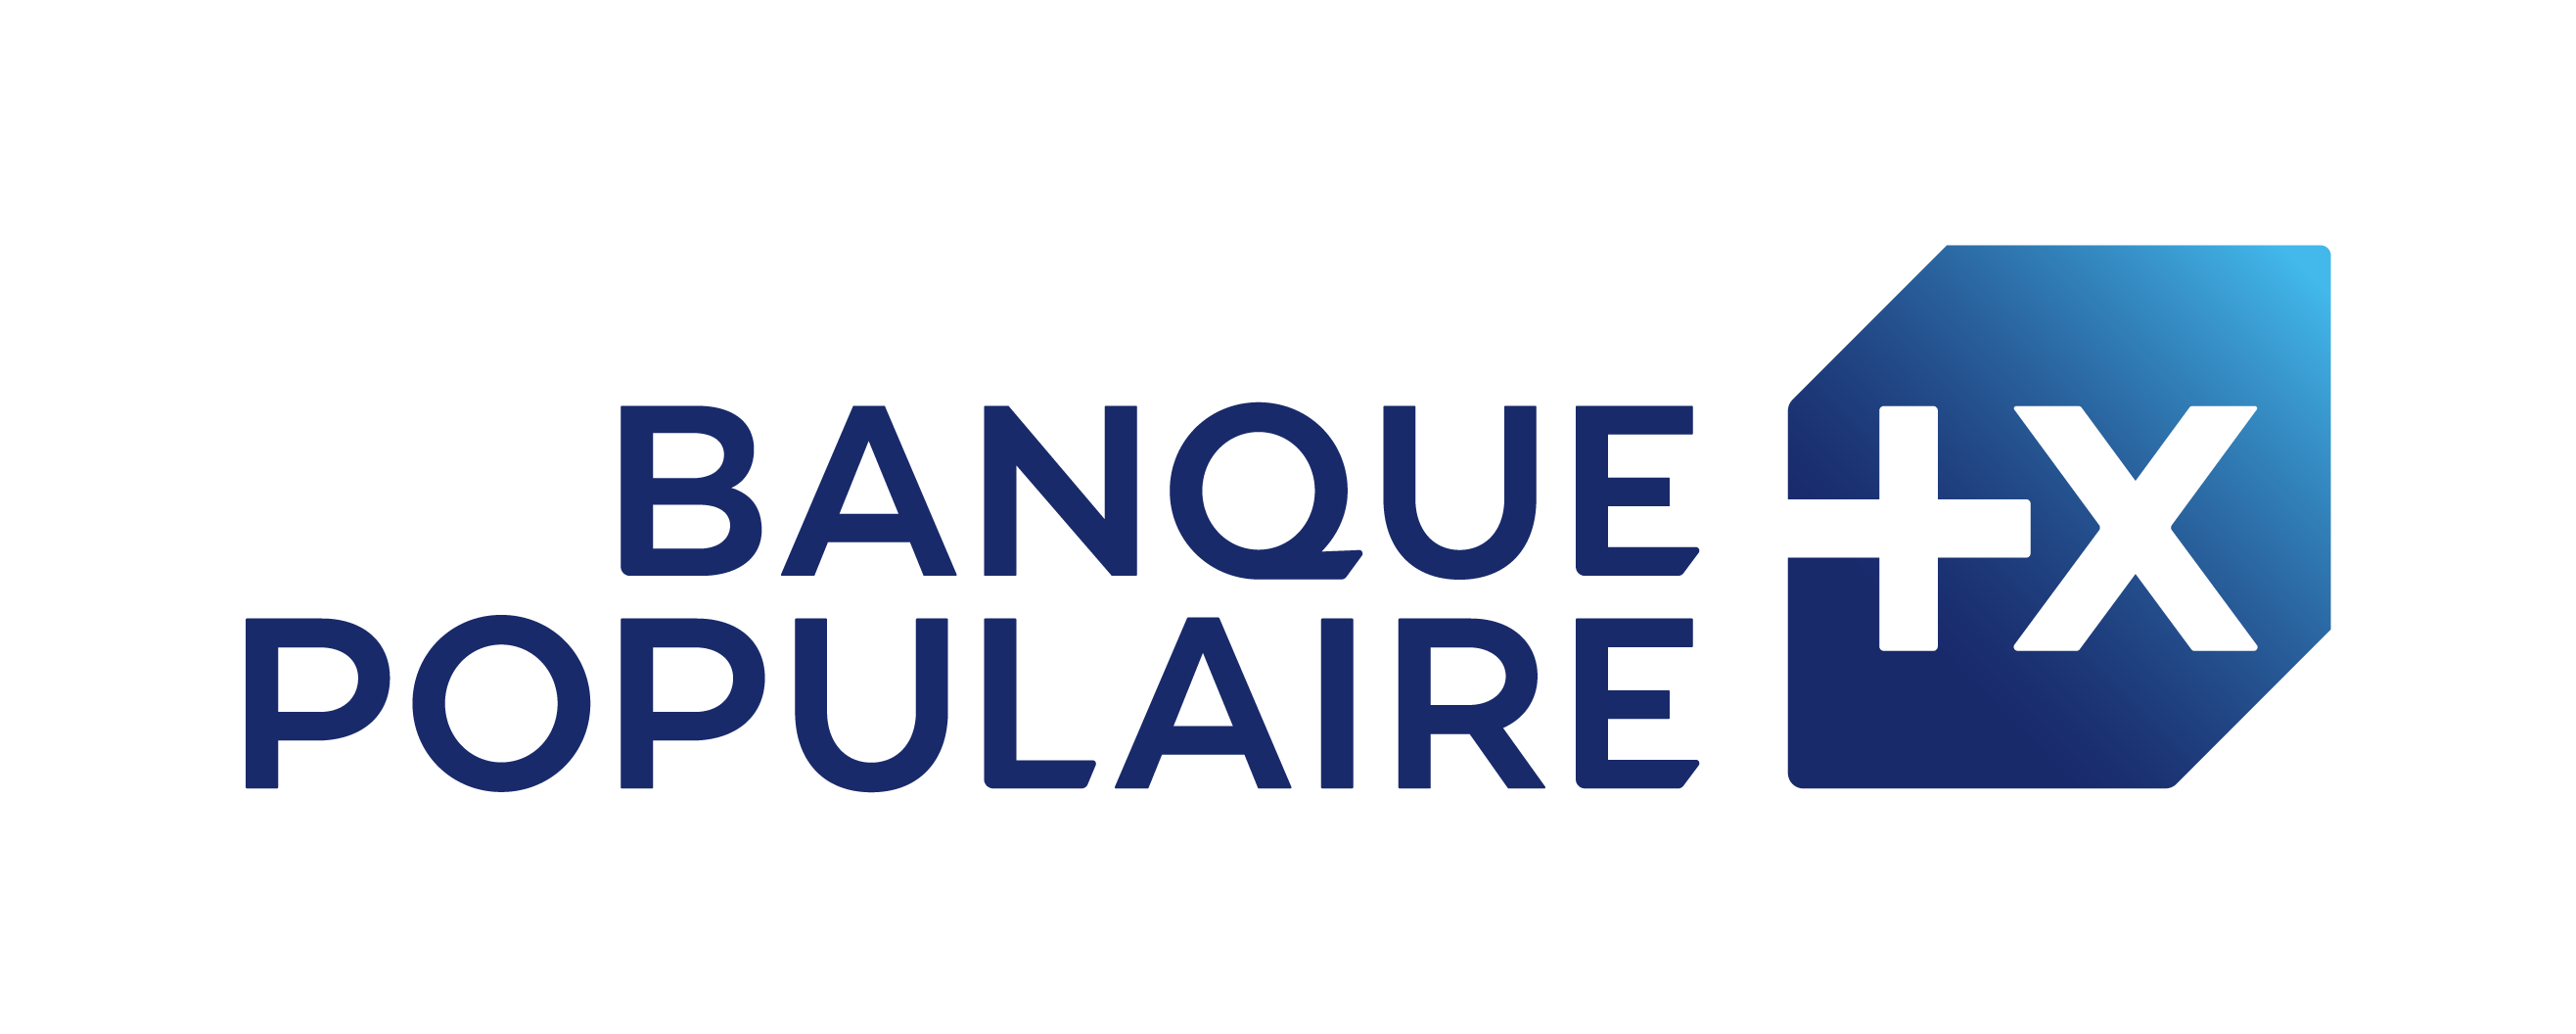 Logo BANQUE POPULAIRE.png